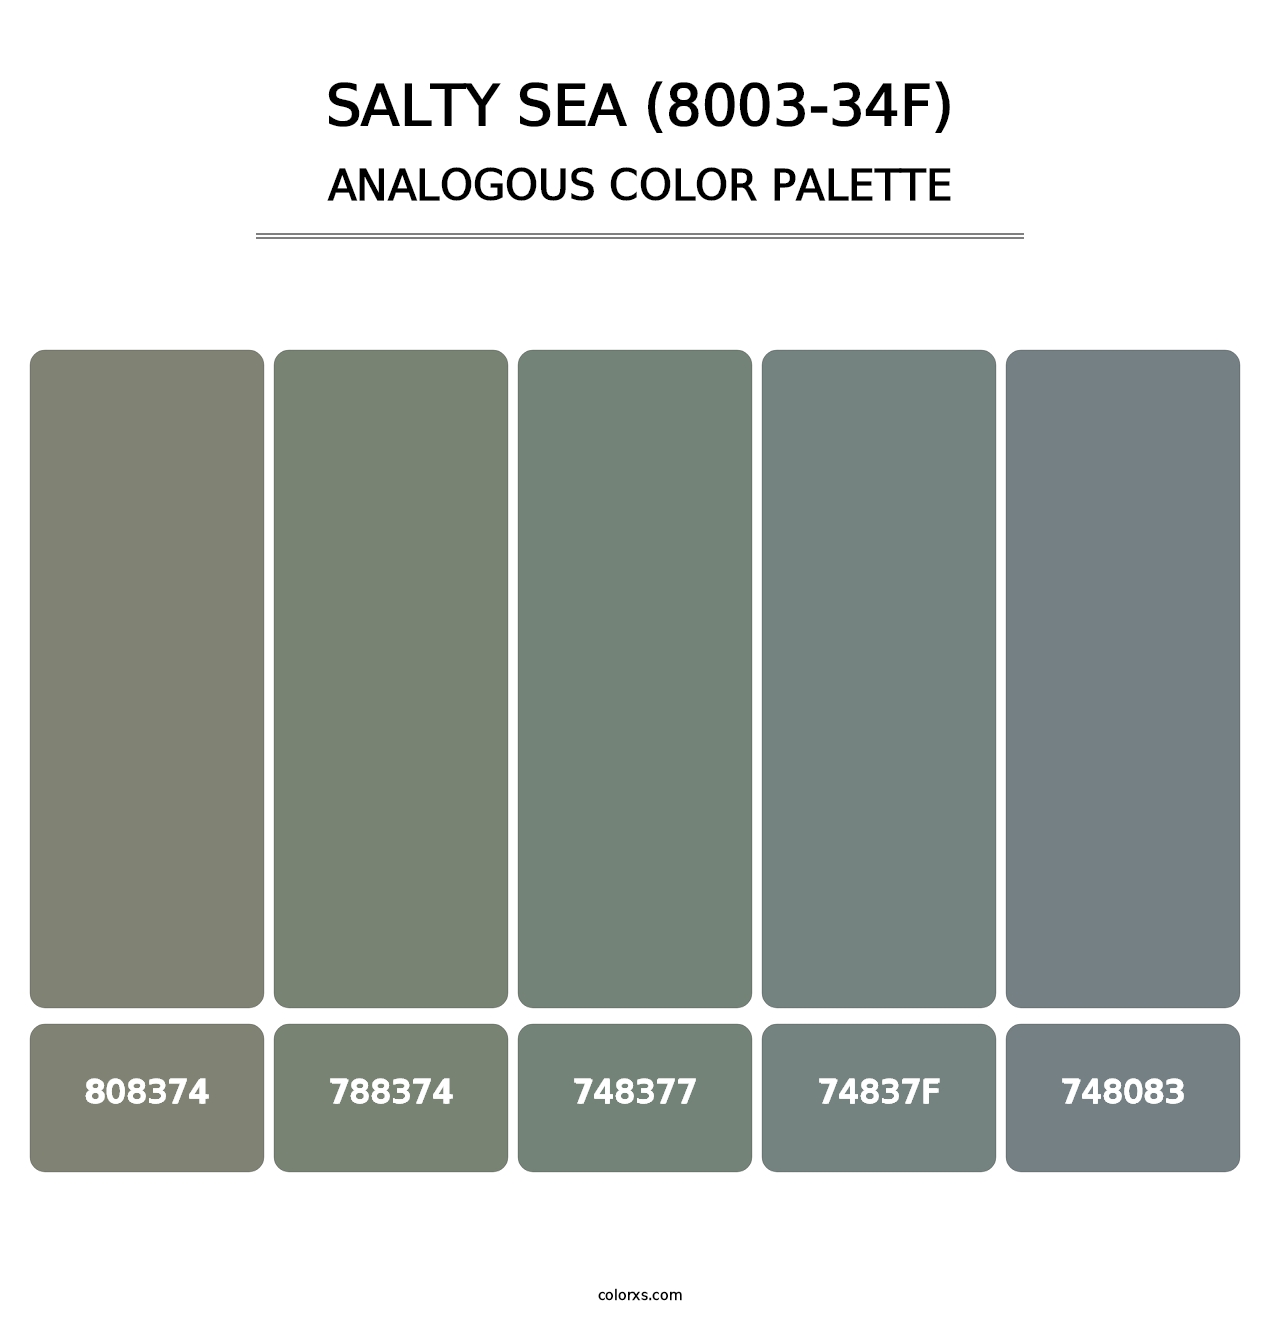 Salty Sea (8003-34F) - Analogous Color Palette